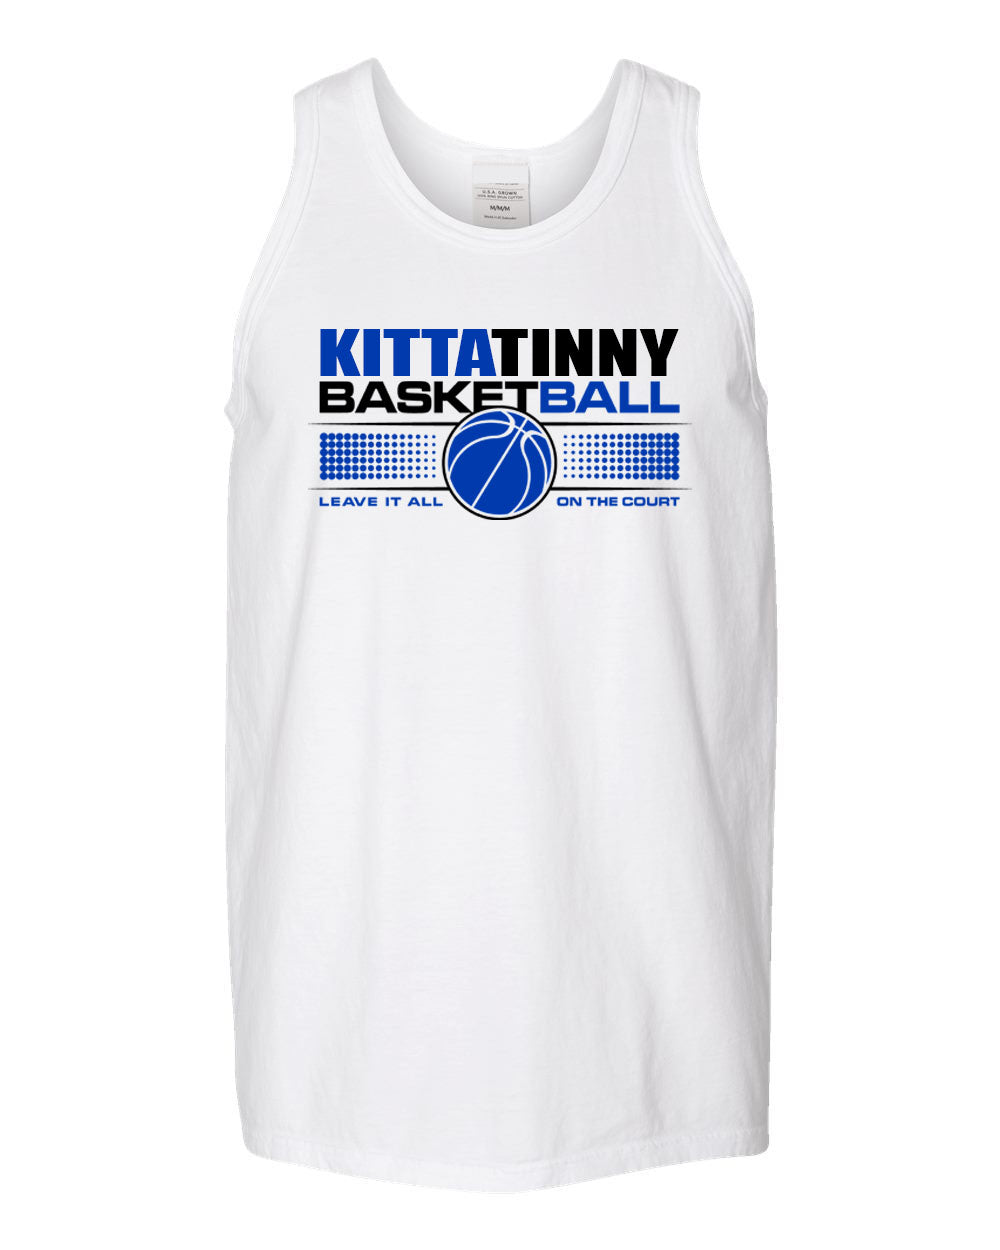 Kittatinny Basketball design 1 Muscle Tank Top